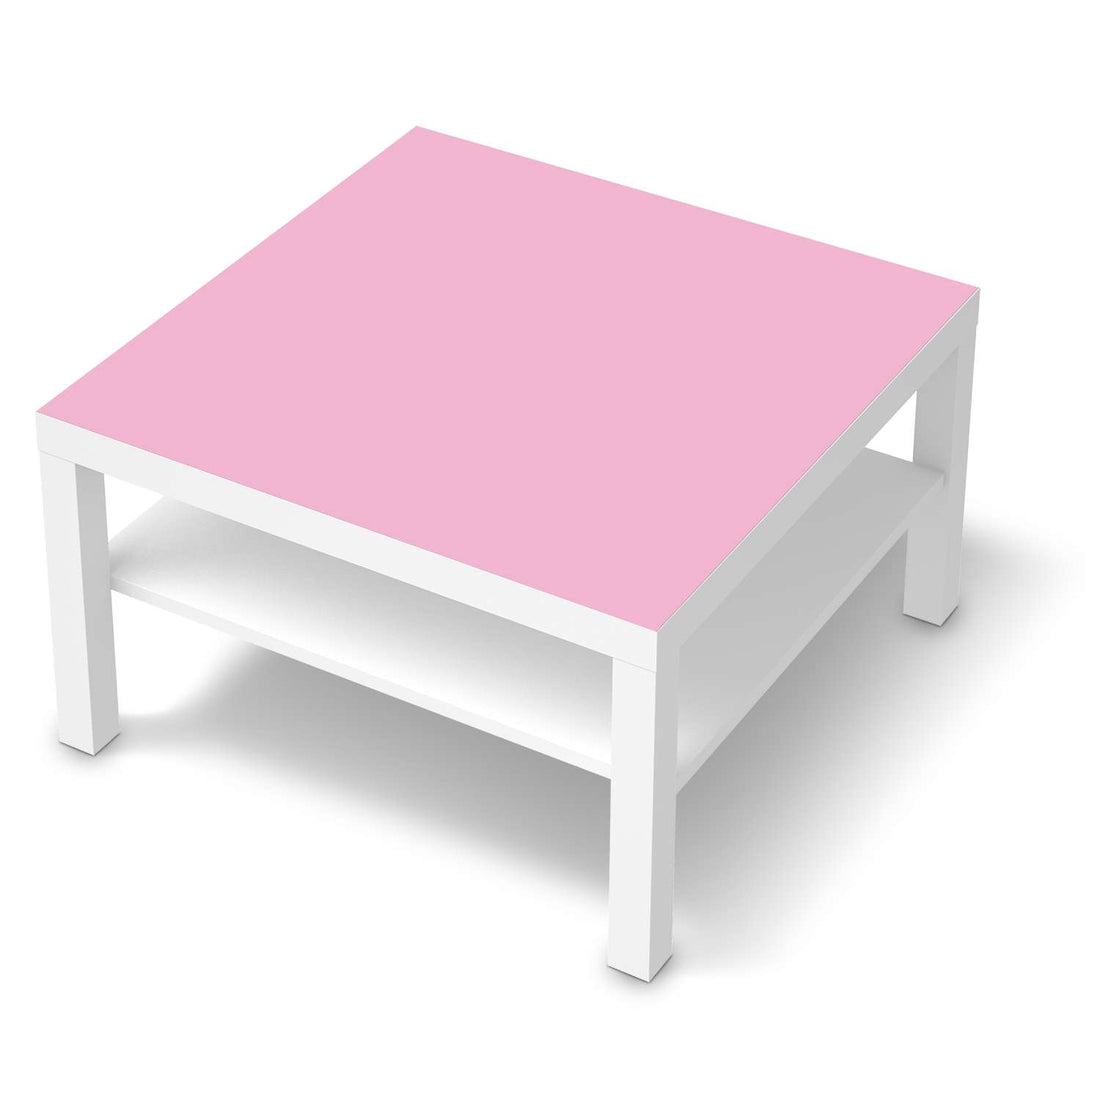 Selbstklebende Folie Pink Light - IKEA Lack Tisch 78x78 cm - weiss